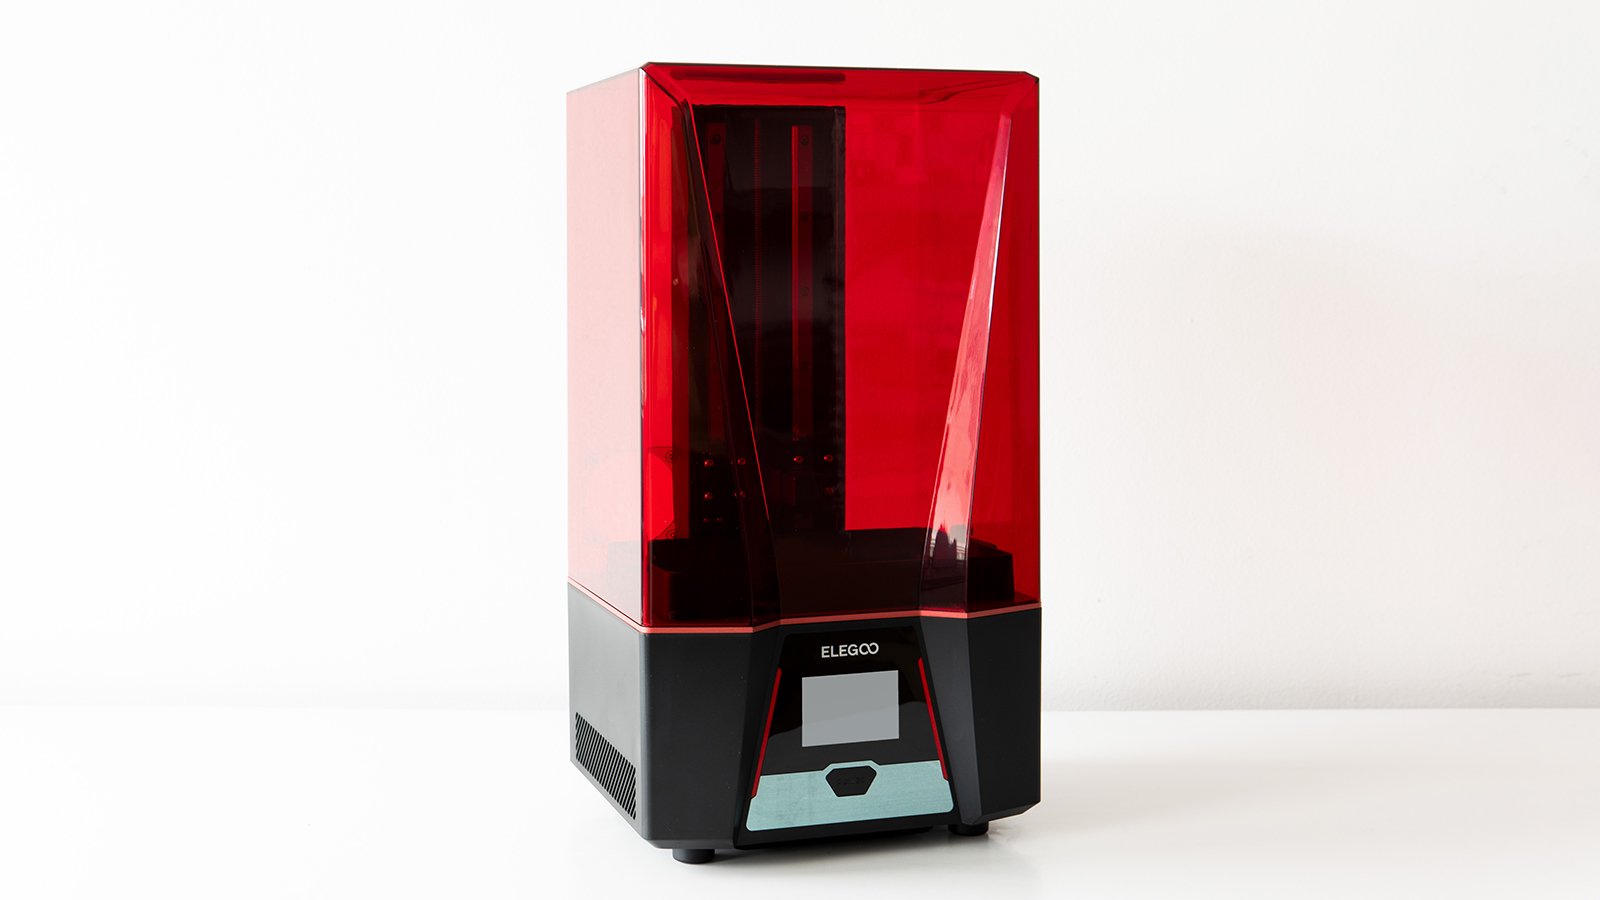 3D Printer Review: Elegoo Jupiter SE - Maker News